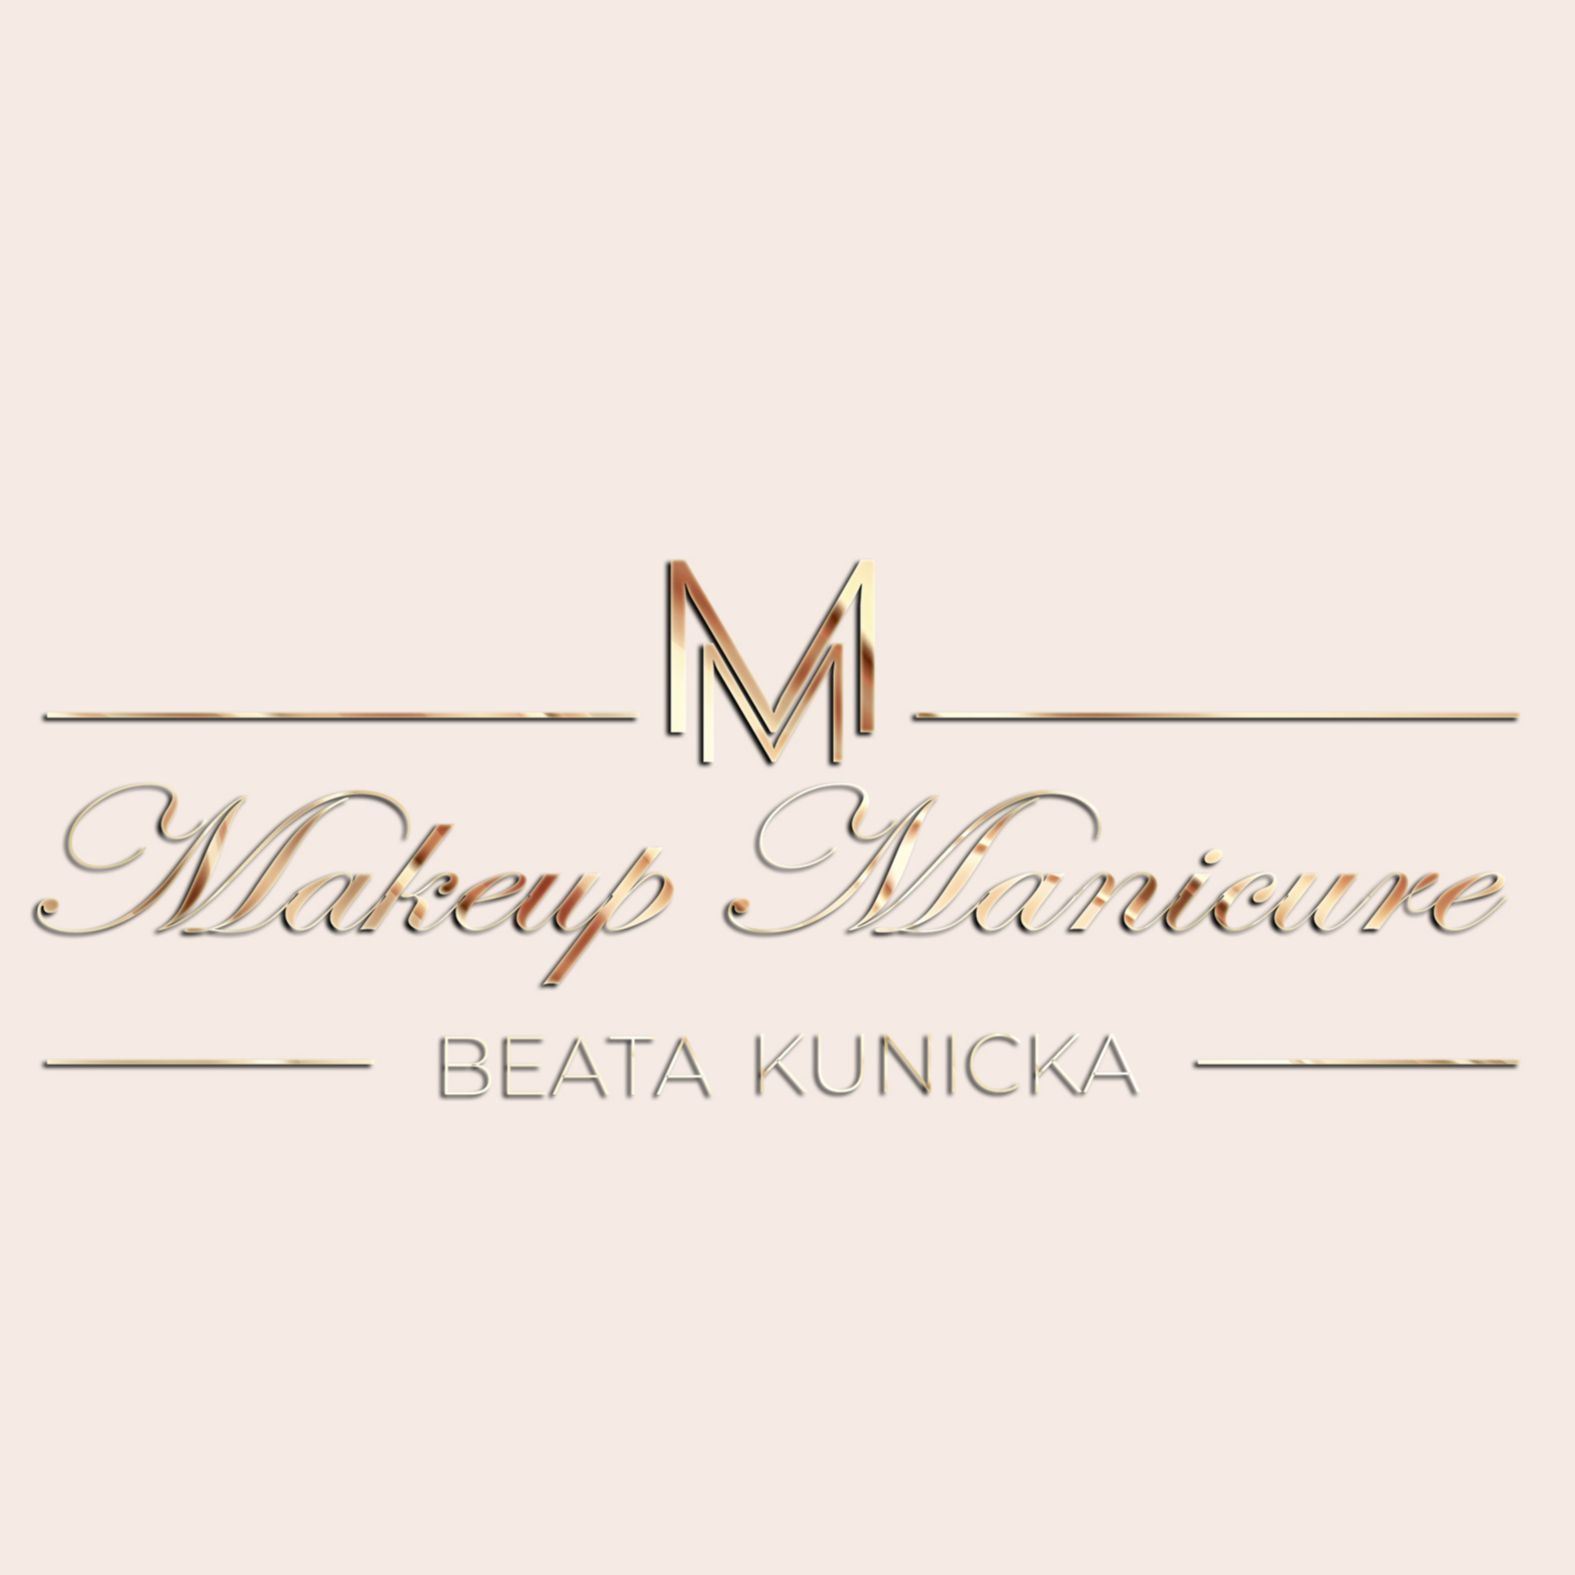 MAKEUP & MANICURE BEATA KUNICKA, Łącko 797A, 33-390, Łącko